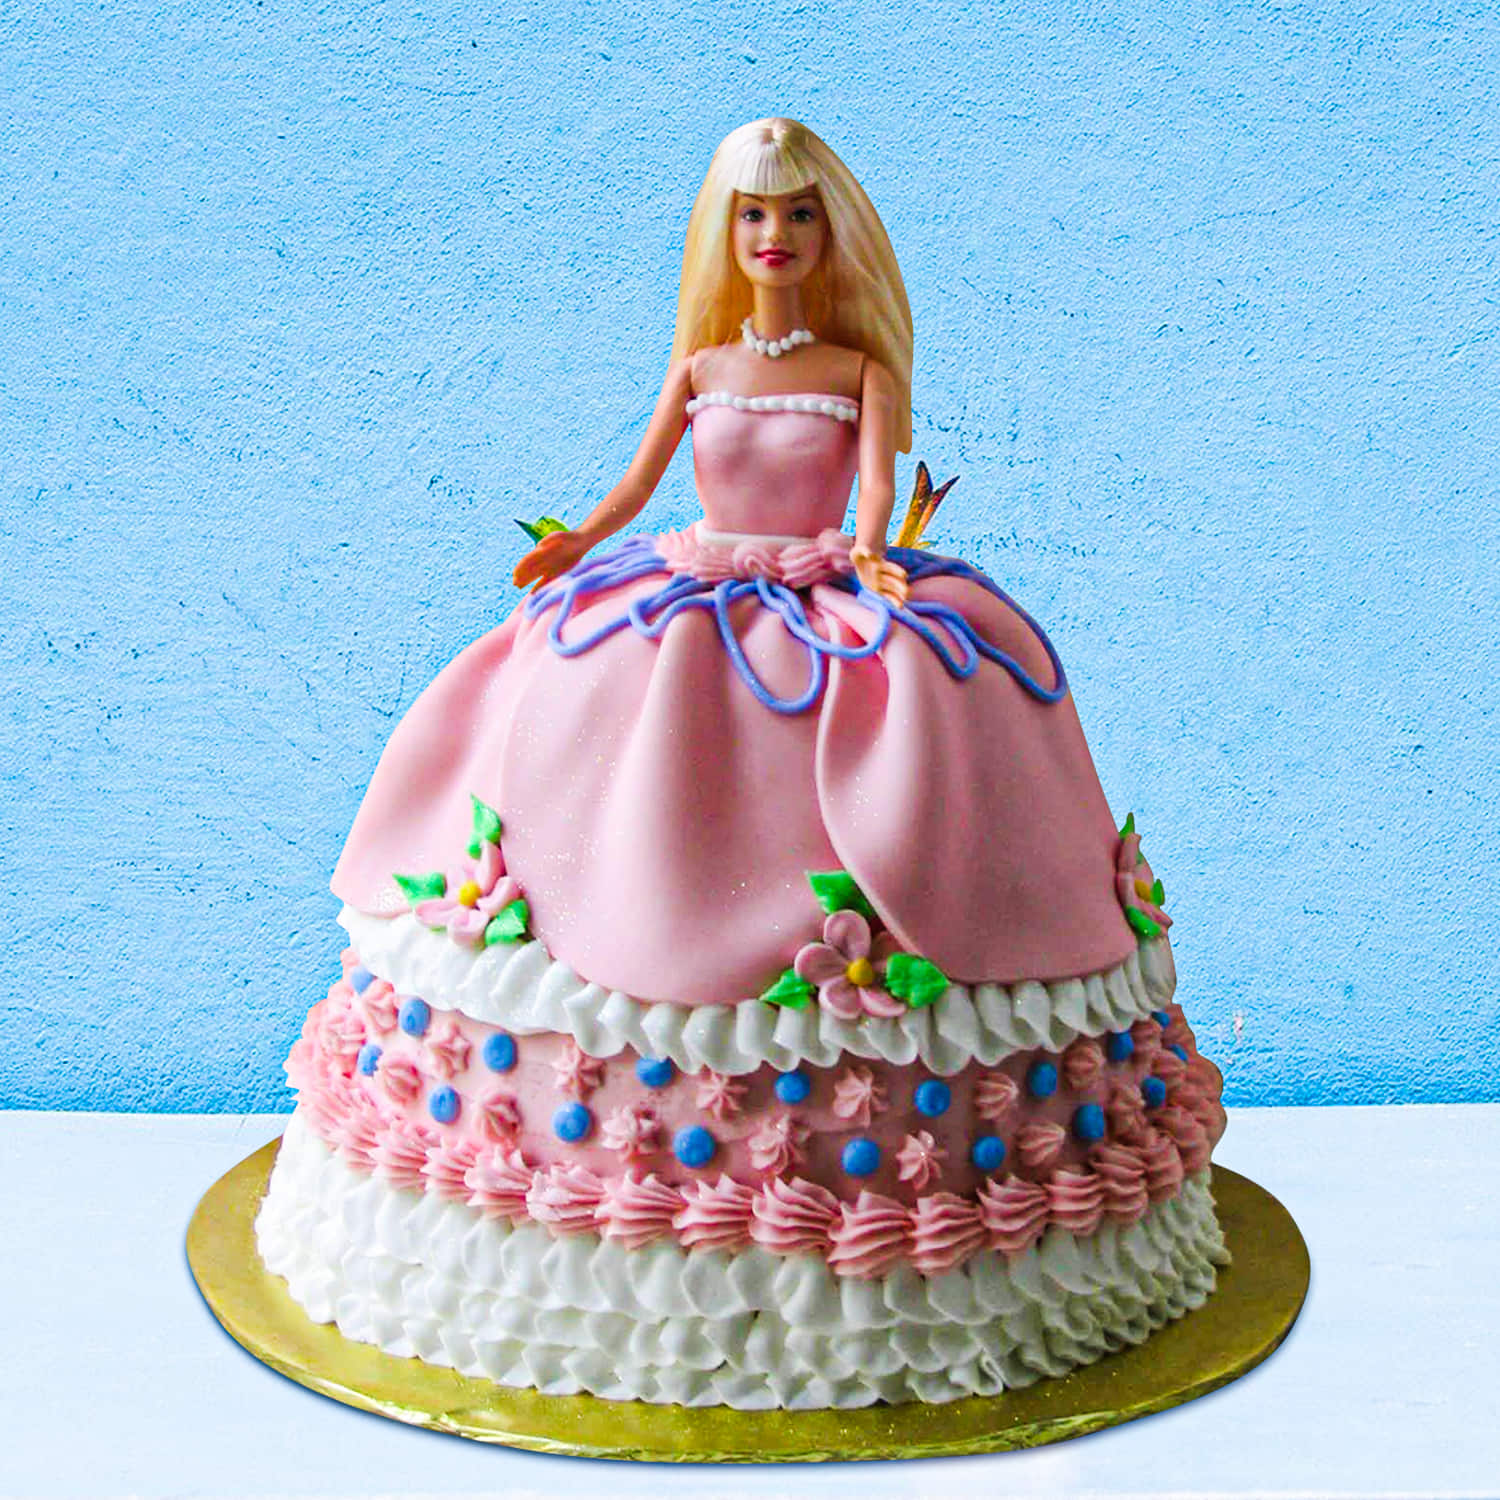 Birthday Cake/ Princess Doll Tutorial How To Cook That Ann Reardon - YouTube